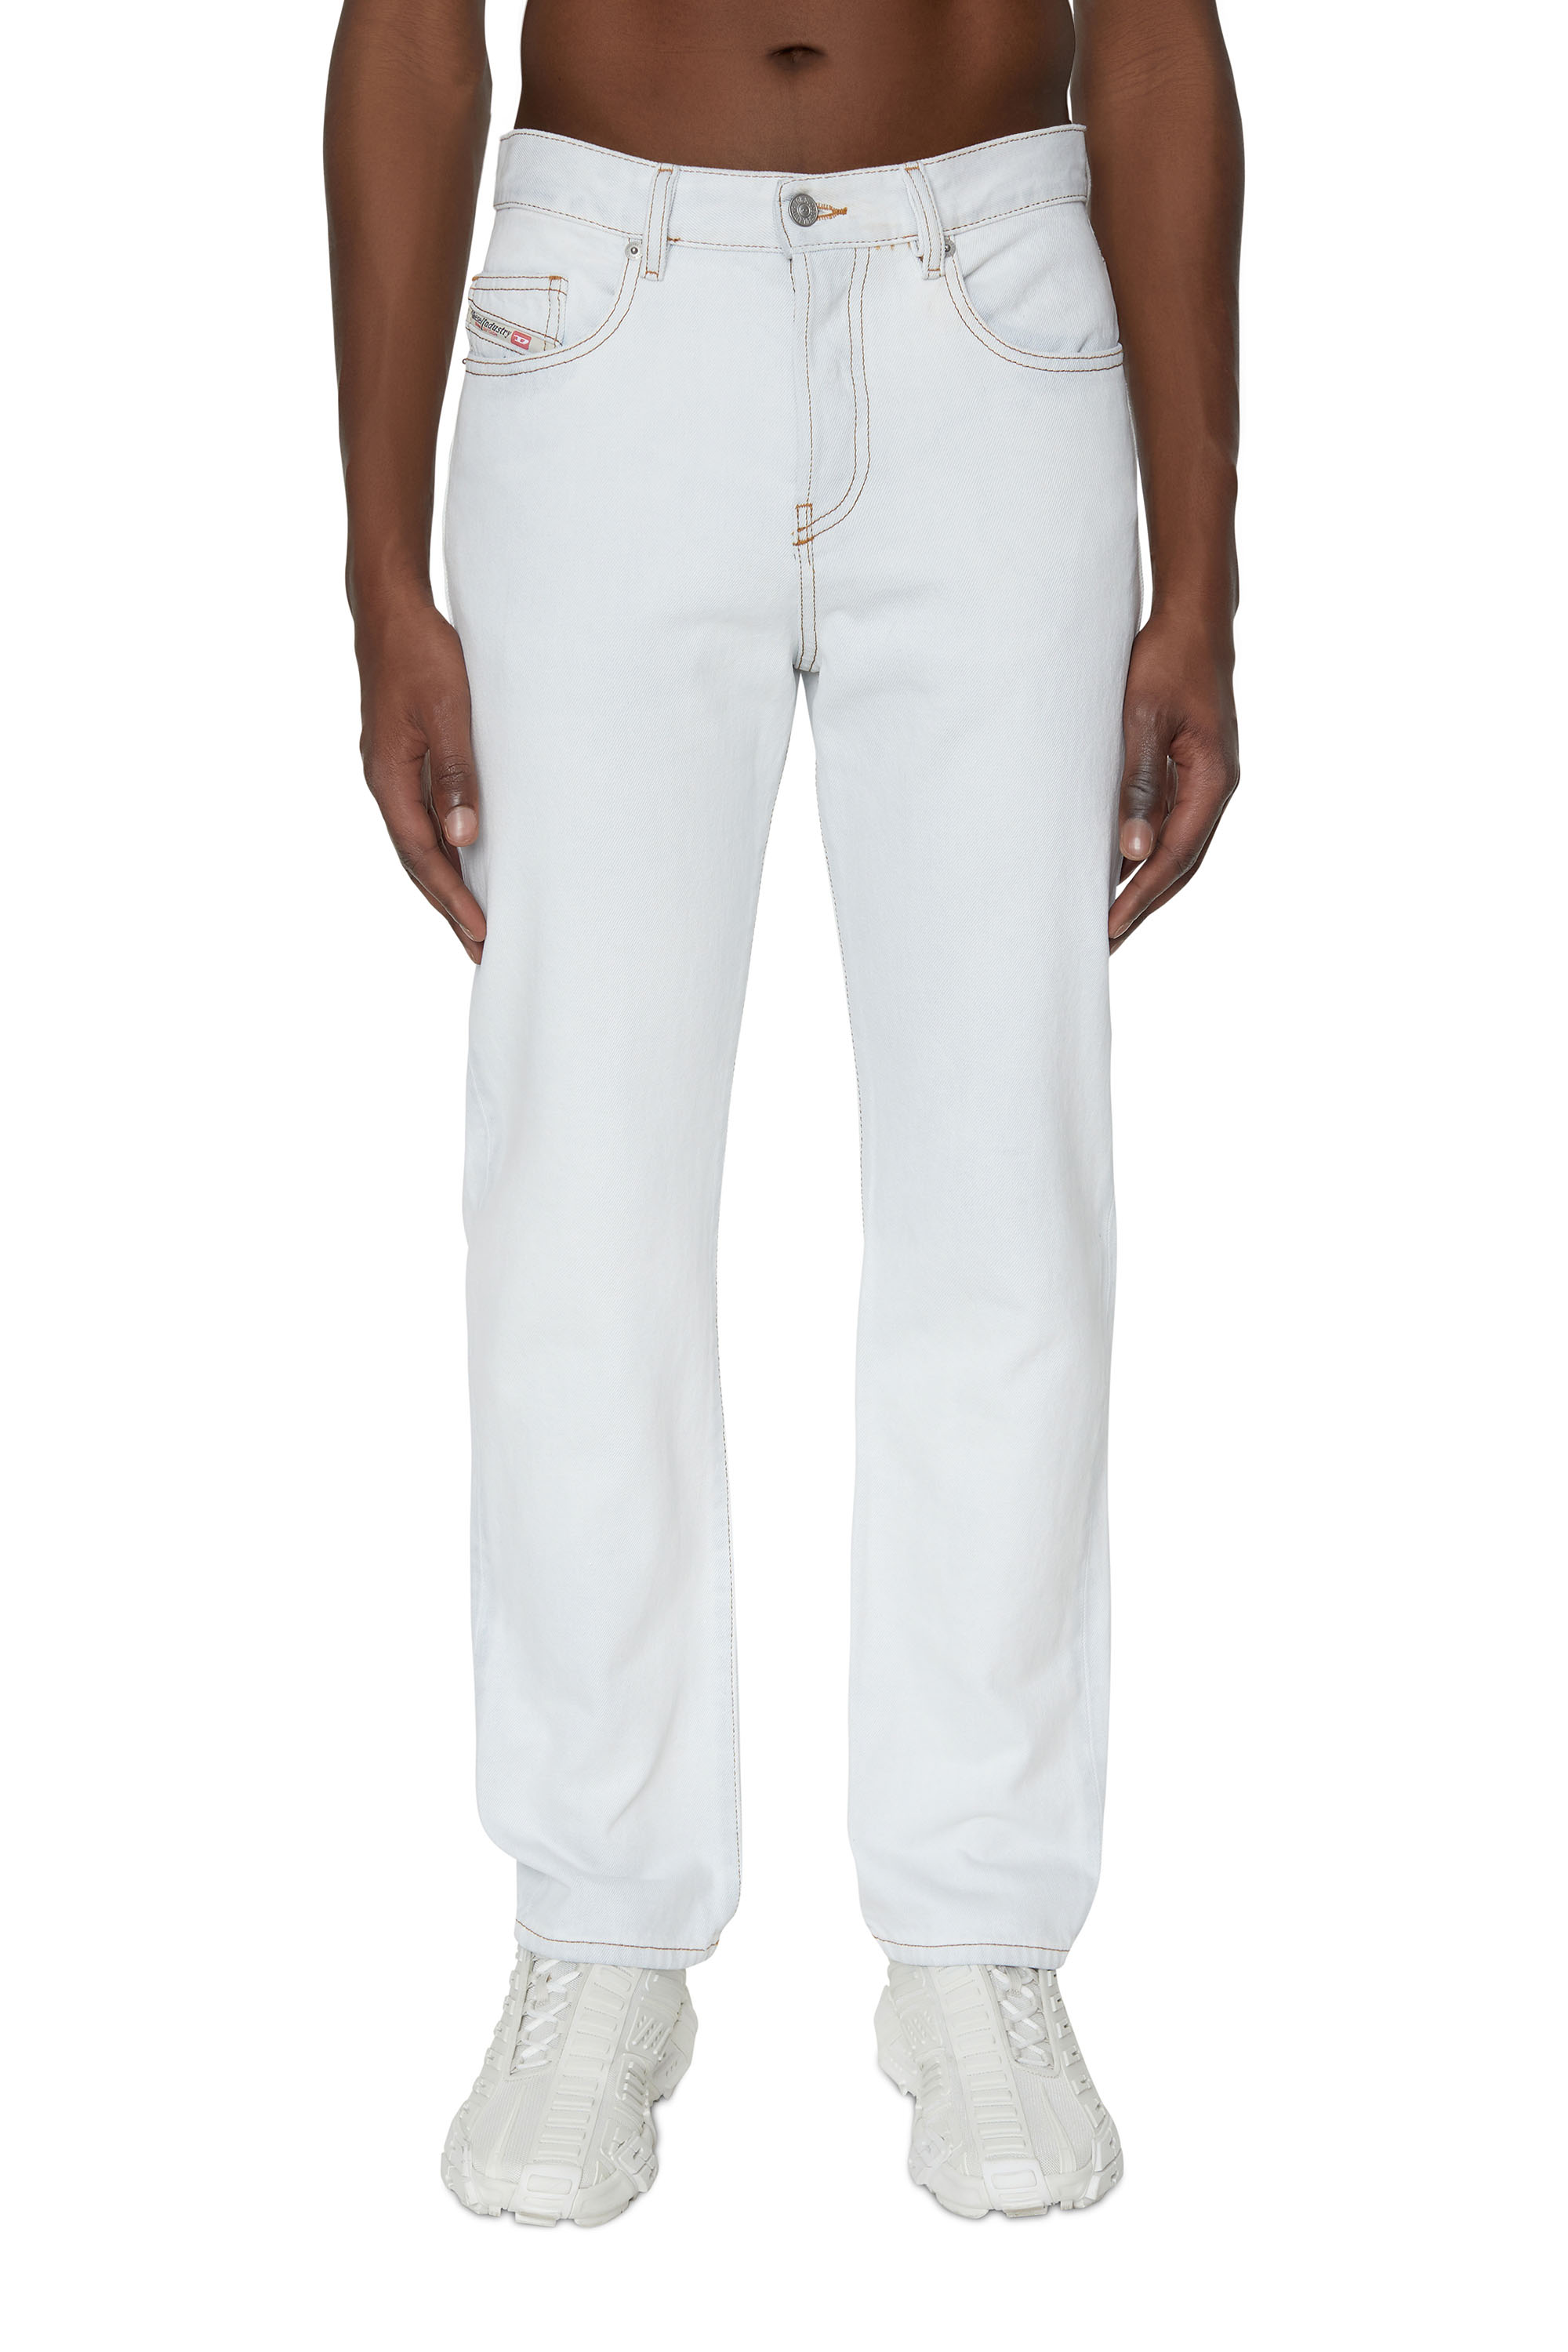 2020 D-VIKER 007H5 Straight Jeans, Blanco - Vaqueros